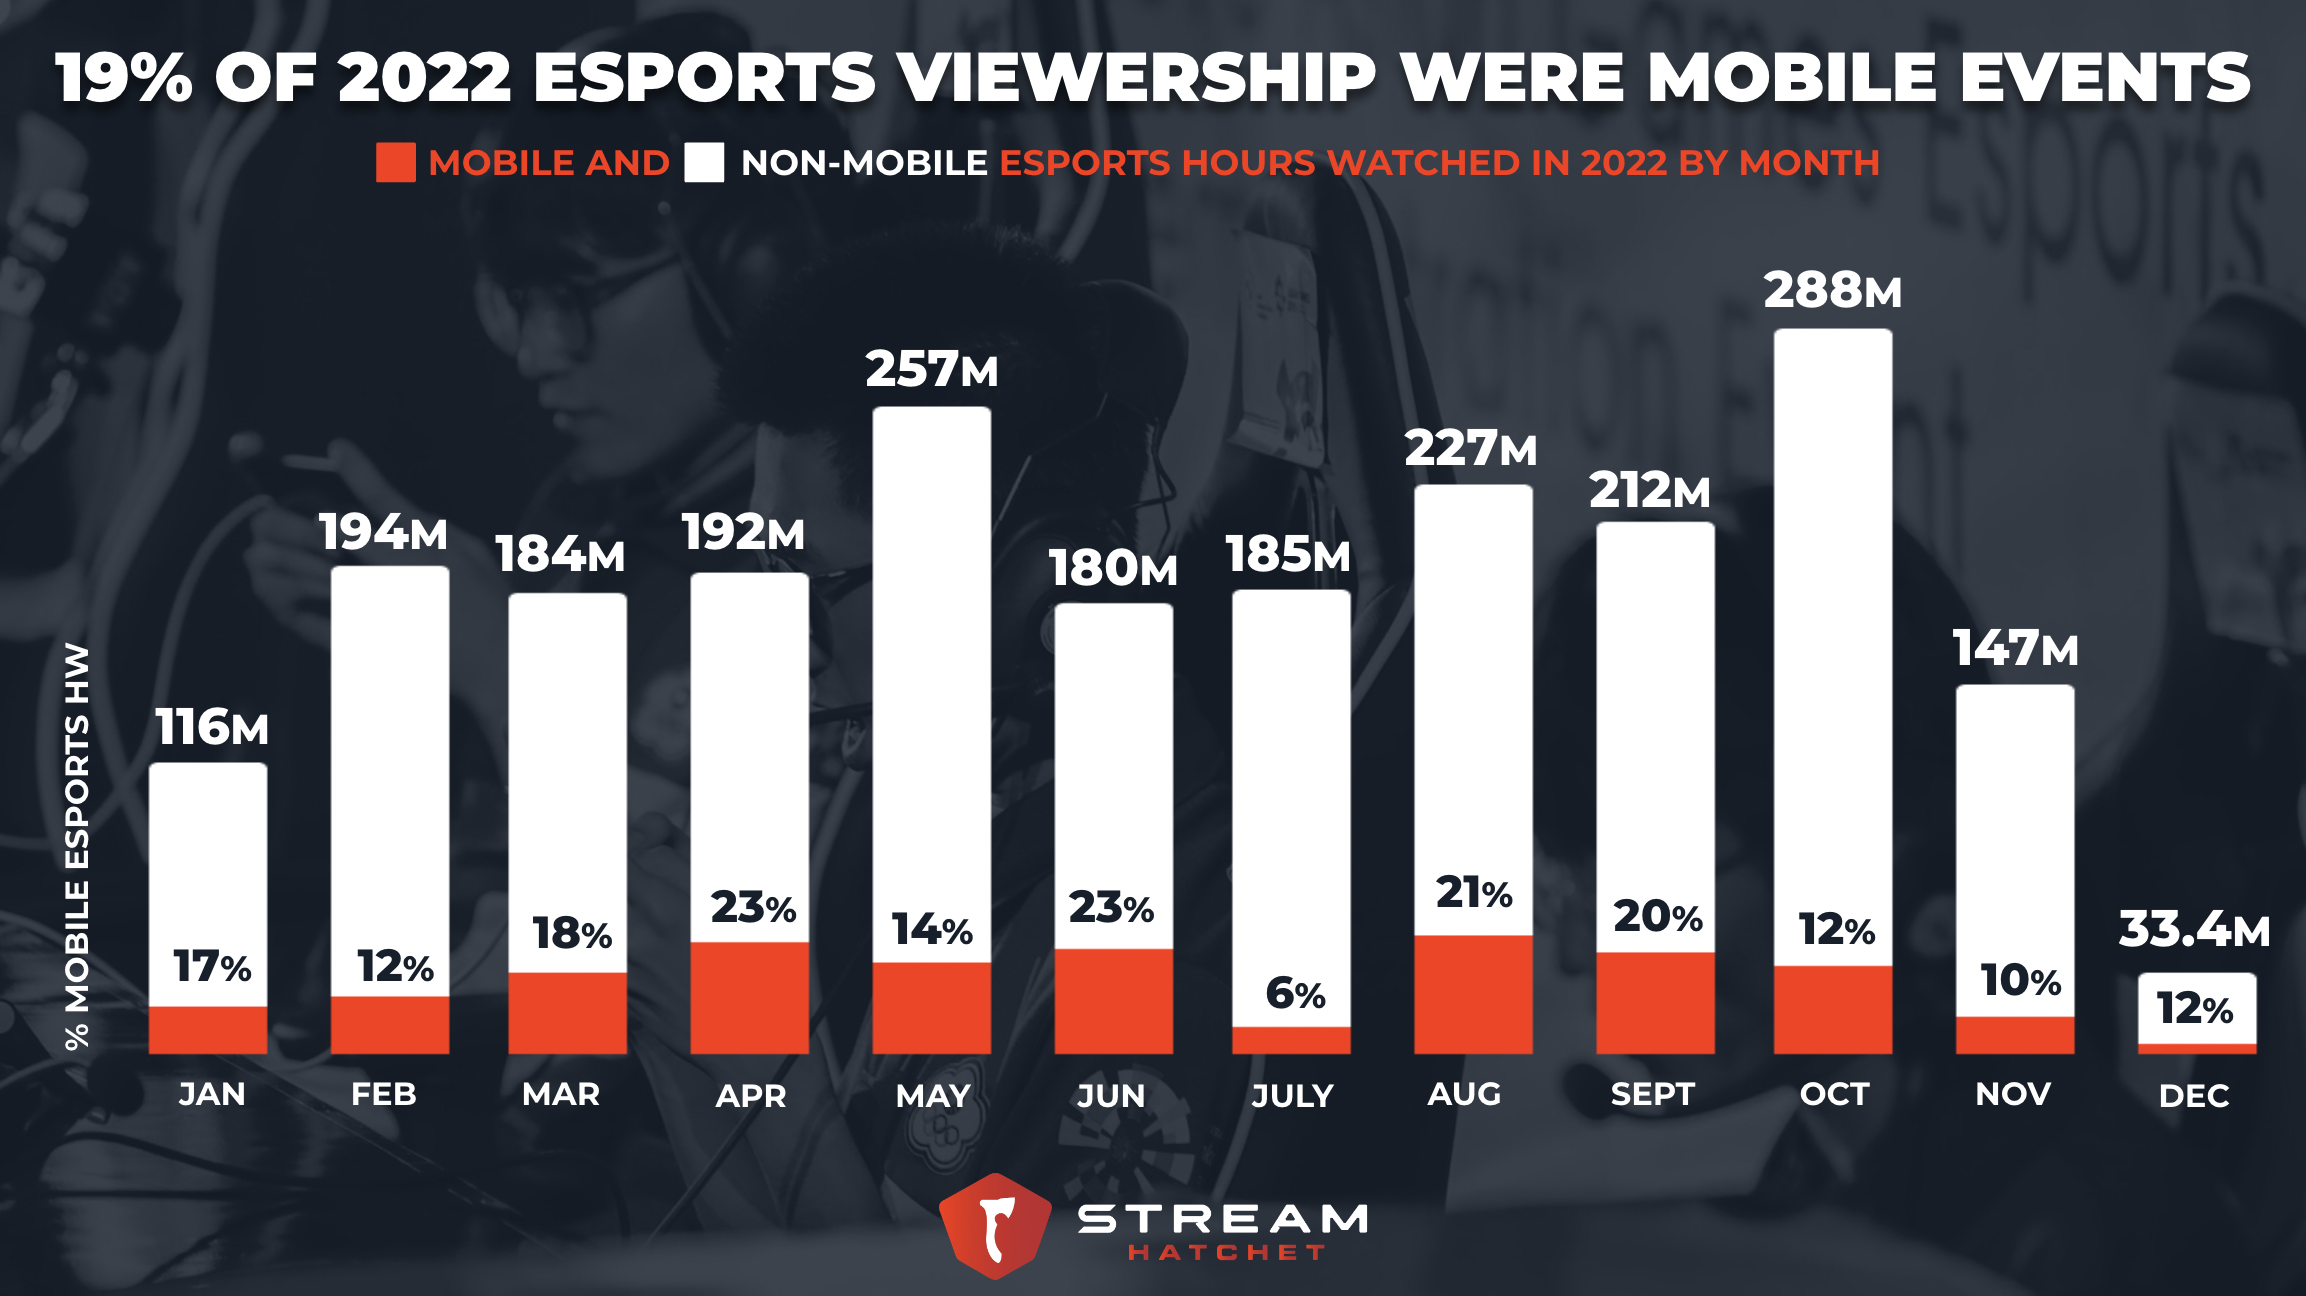 HotS - Esports Viewership and Statistics